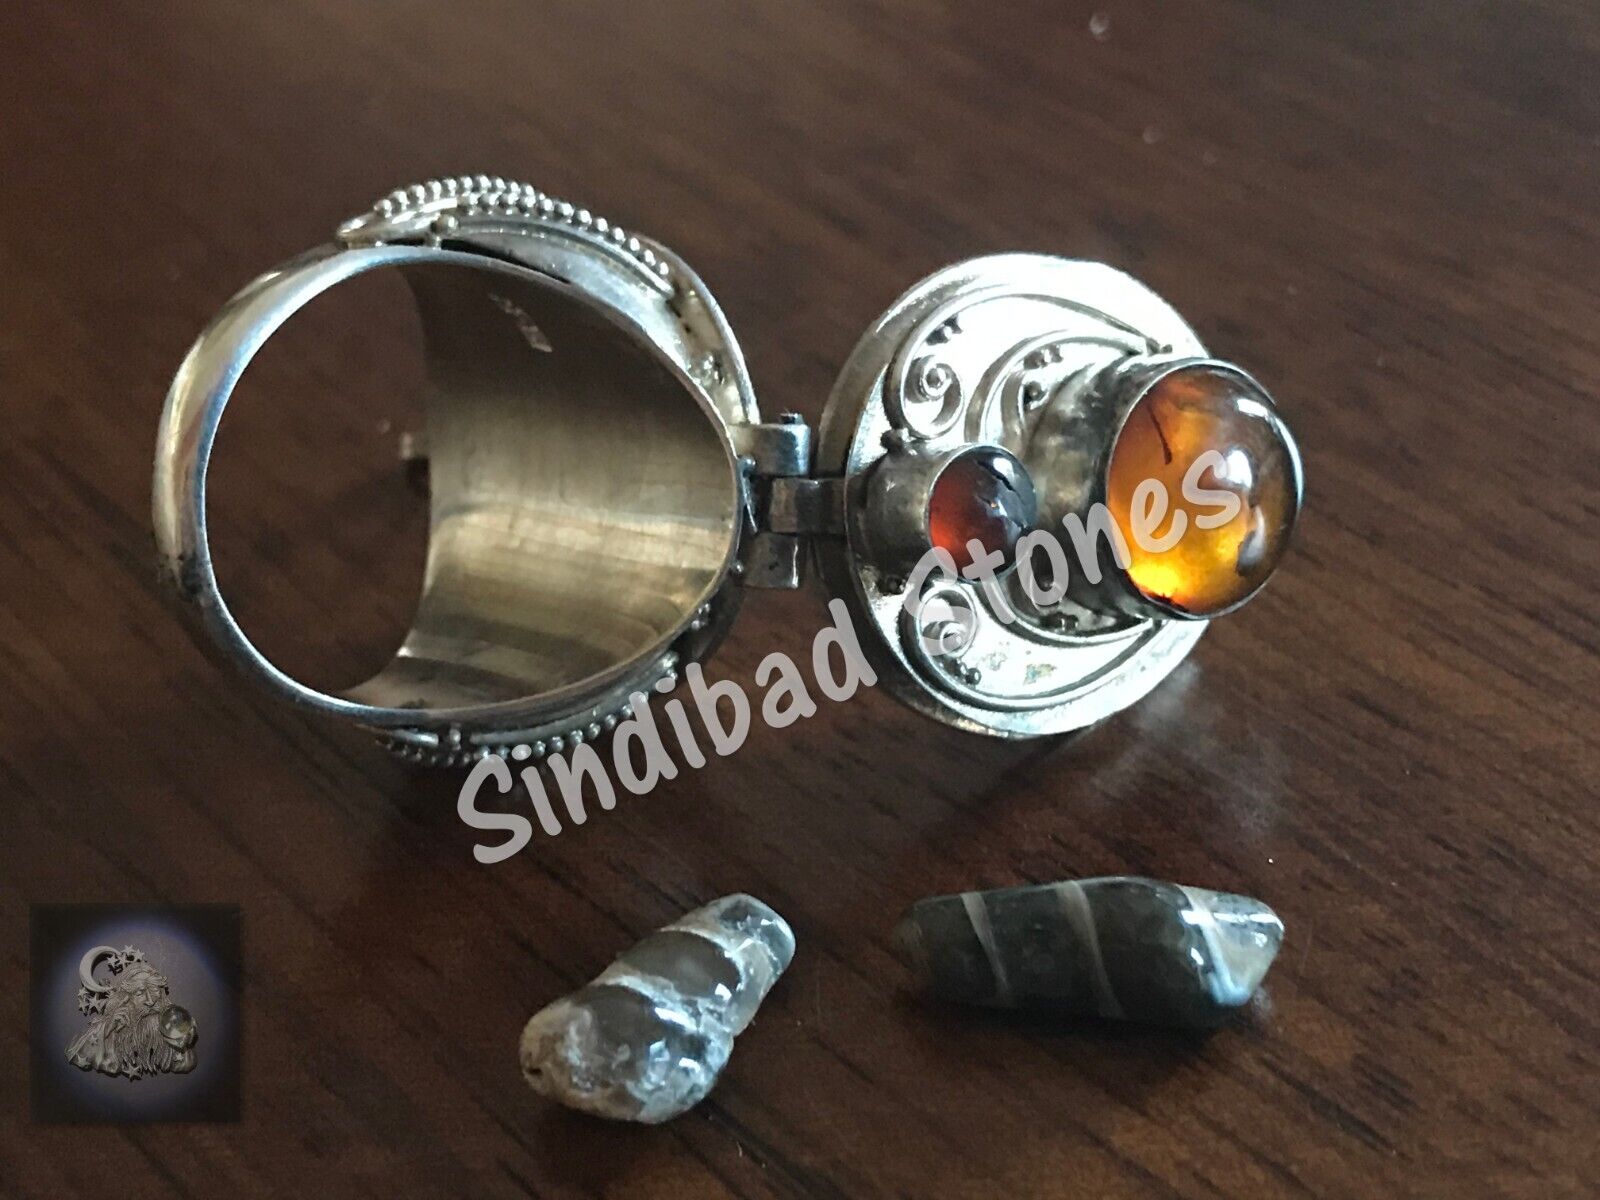 Spiritual stones ring, ruhani ring - خاتم الاحجار الروحانية، خاتم روحاني